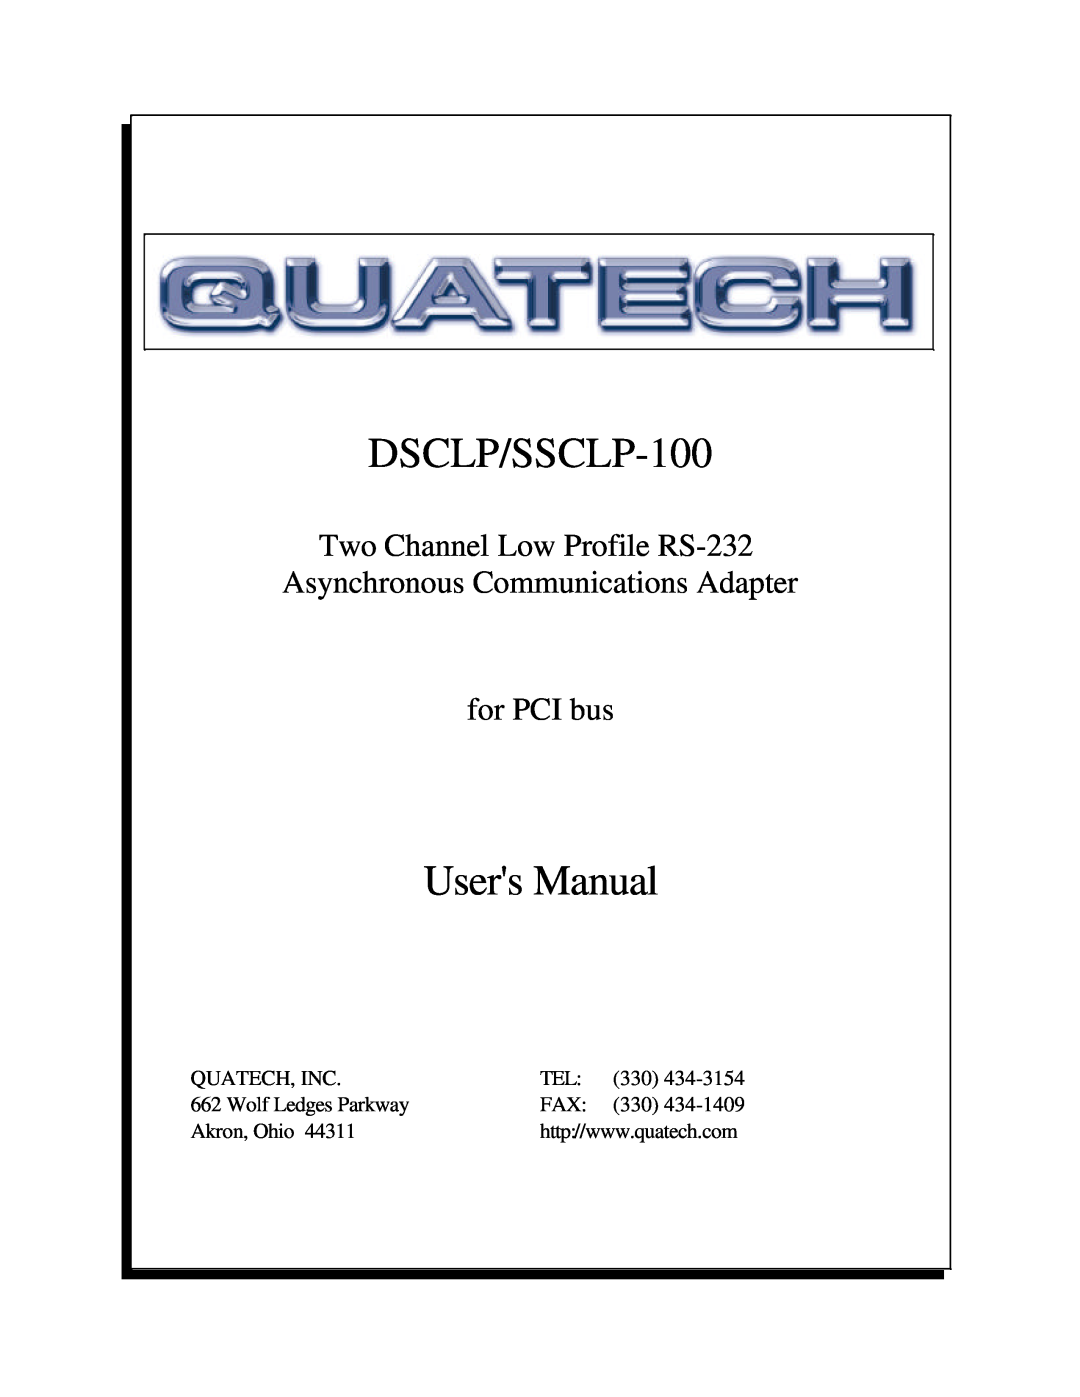 Quatech DSCLP-100 user manual DSCLP/SSCLP-100, Users Manual, for PCI bus 